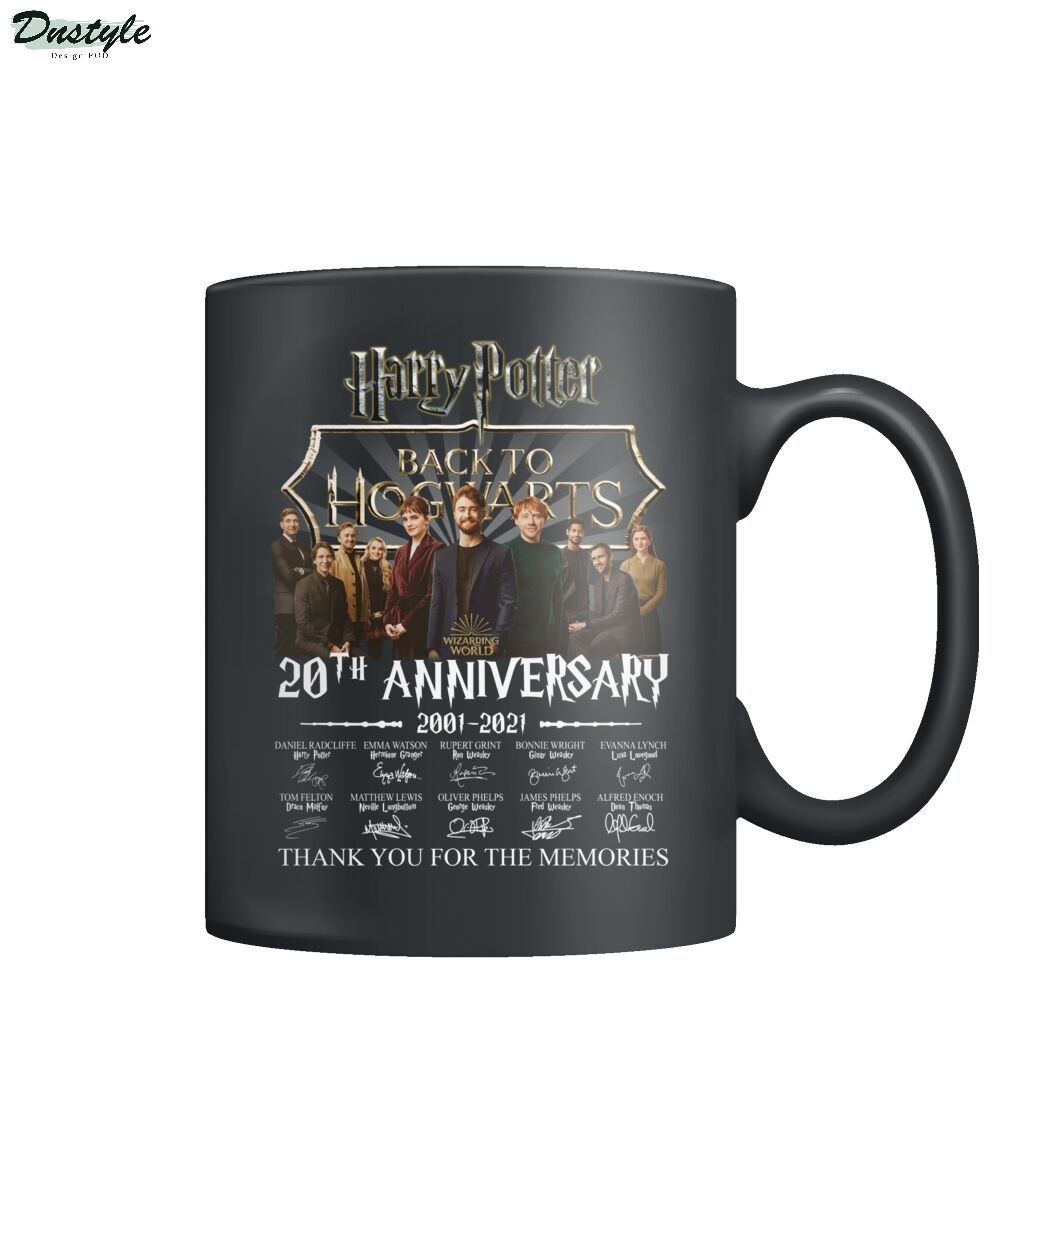 Harry Potter back to hogwarts 20th anniversary mug